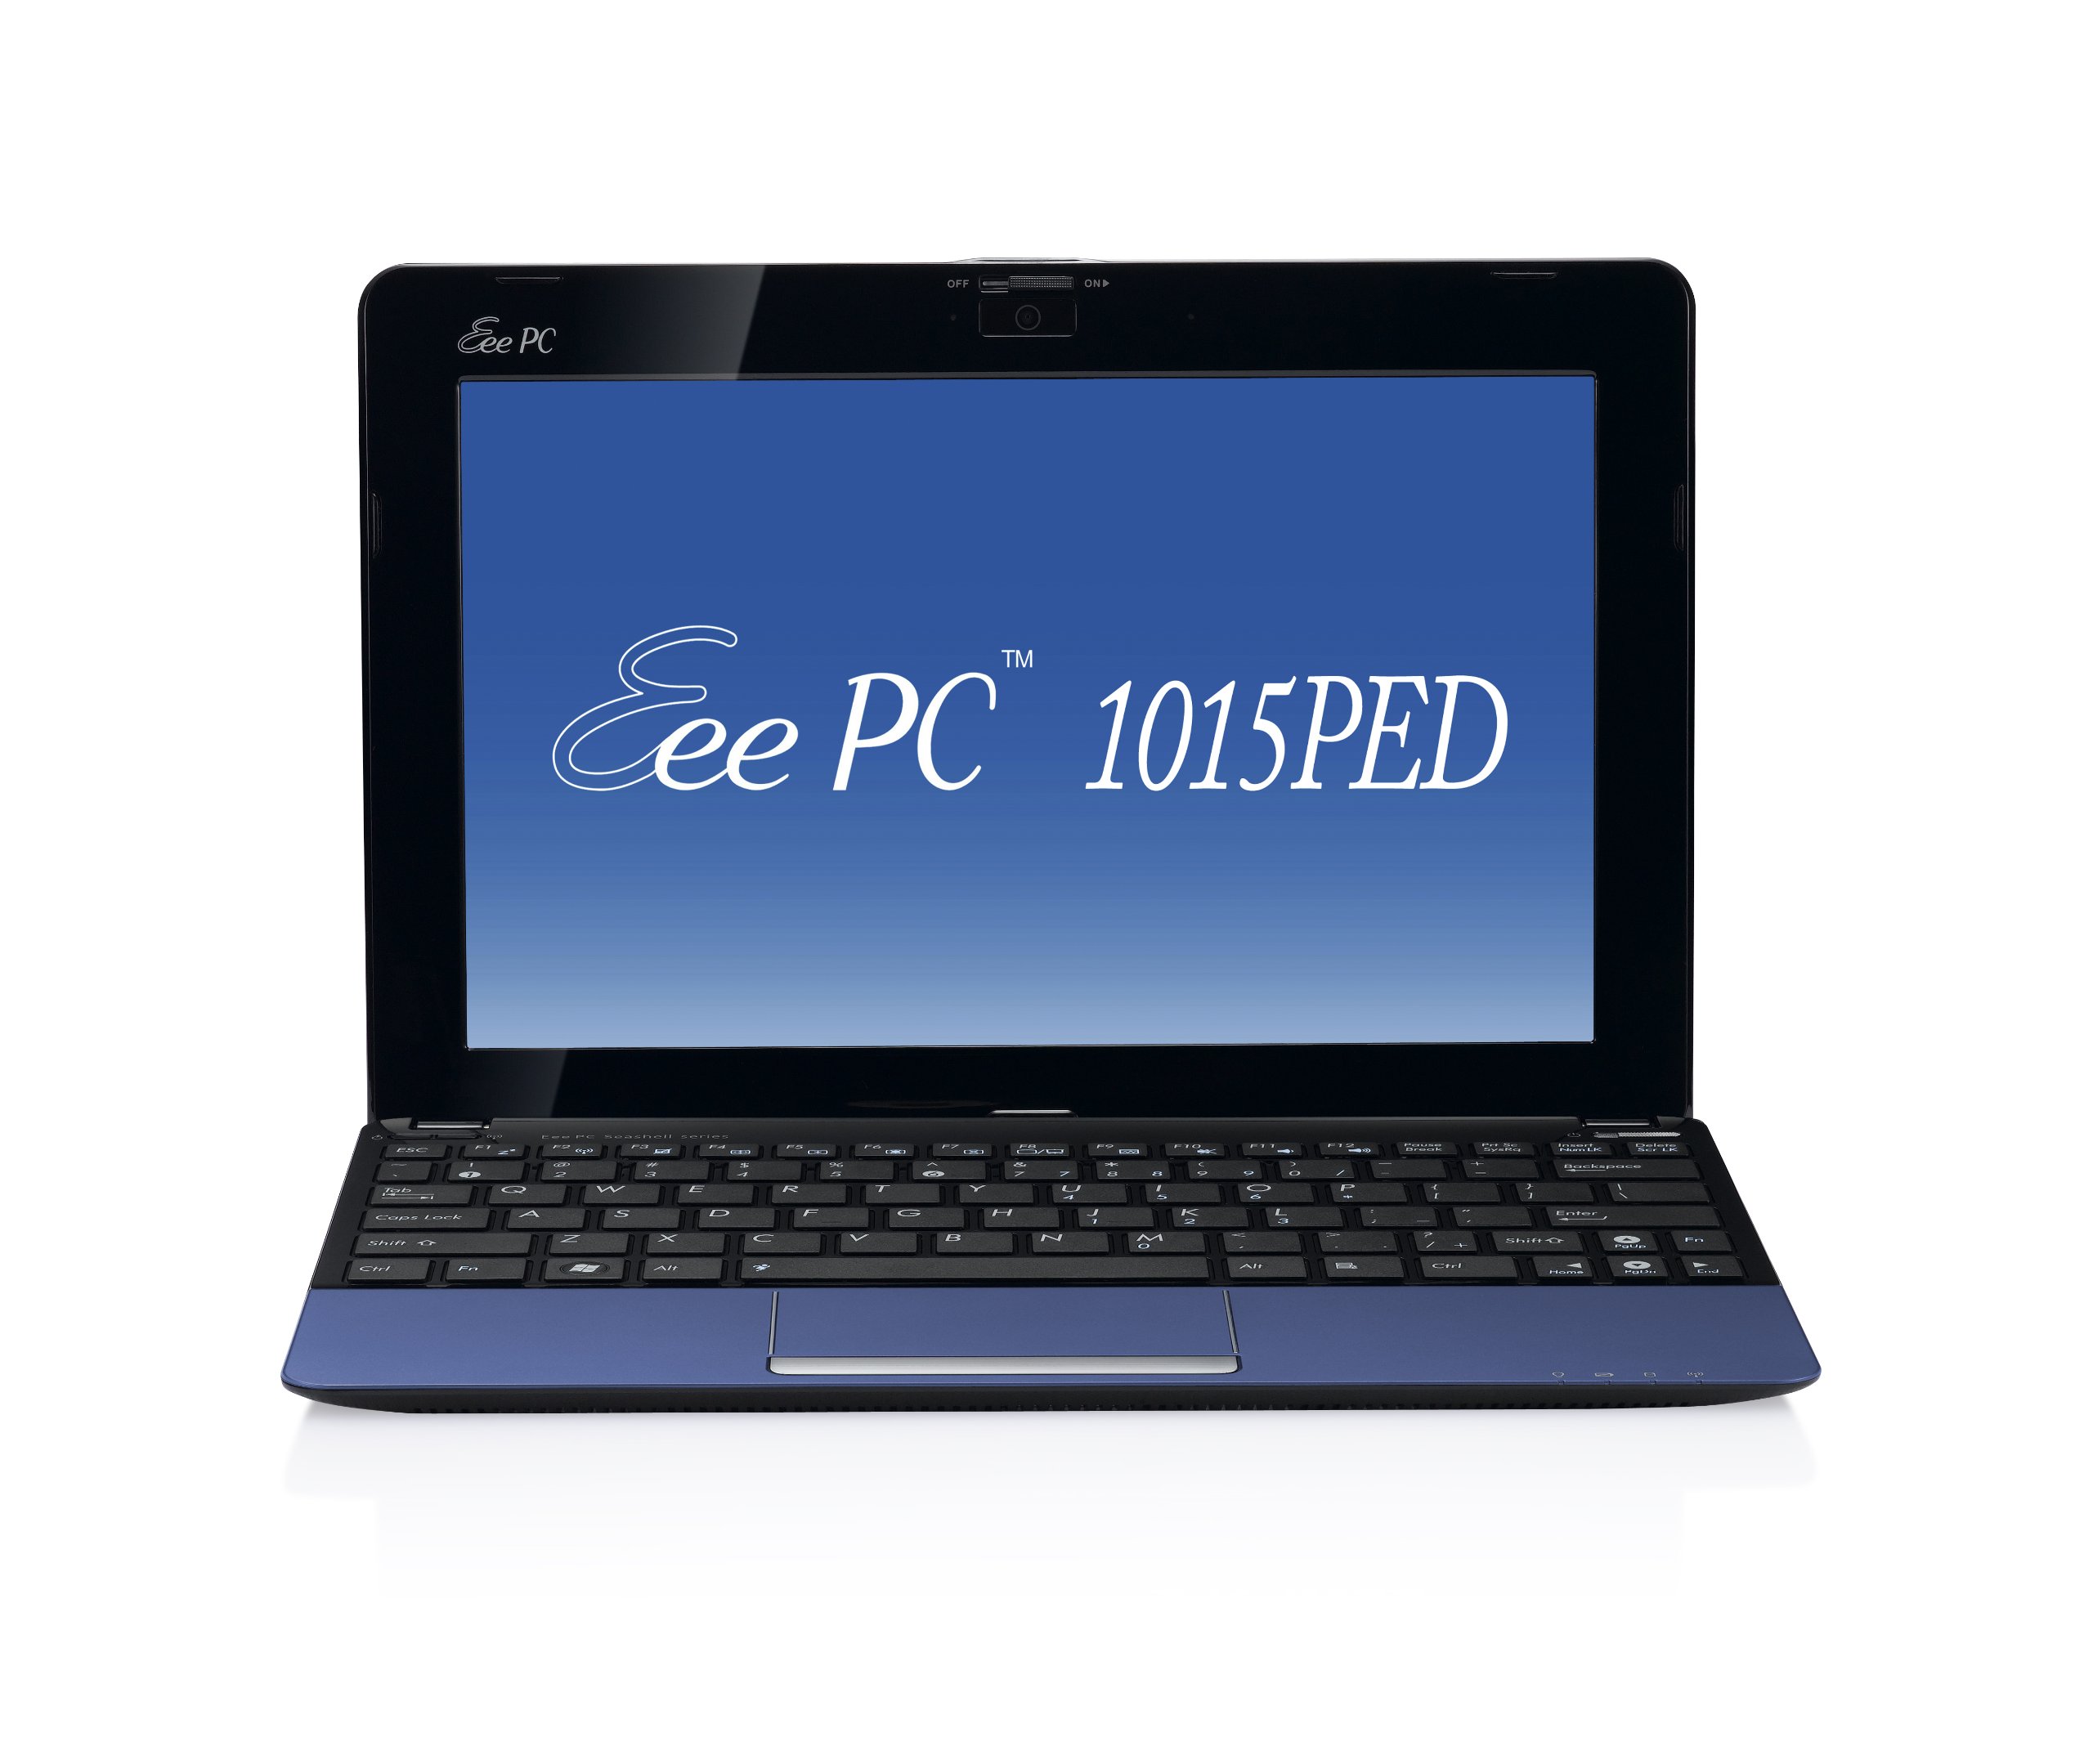 Asus Eee PC 1015PED-PU17-BU 10.1-Inch Netbook (Blue)